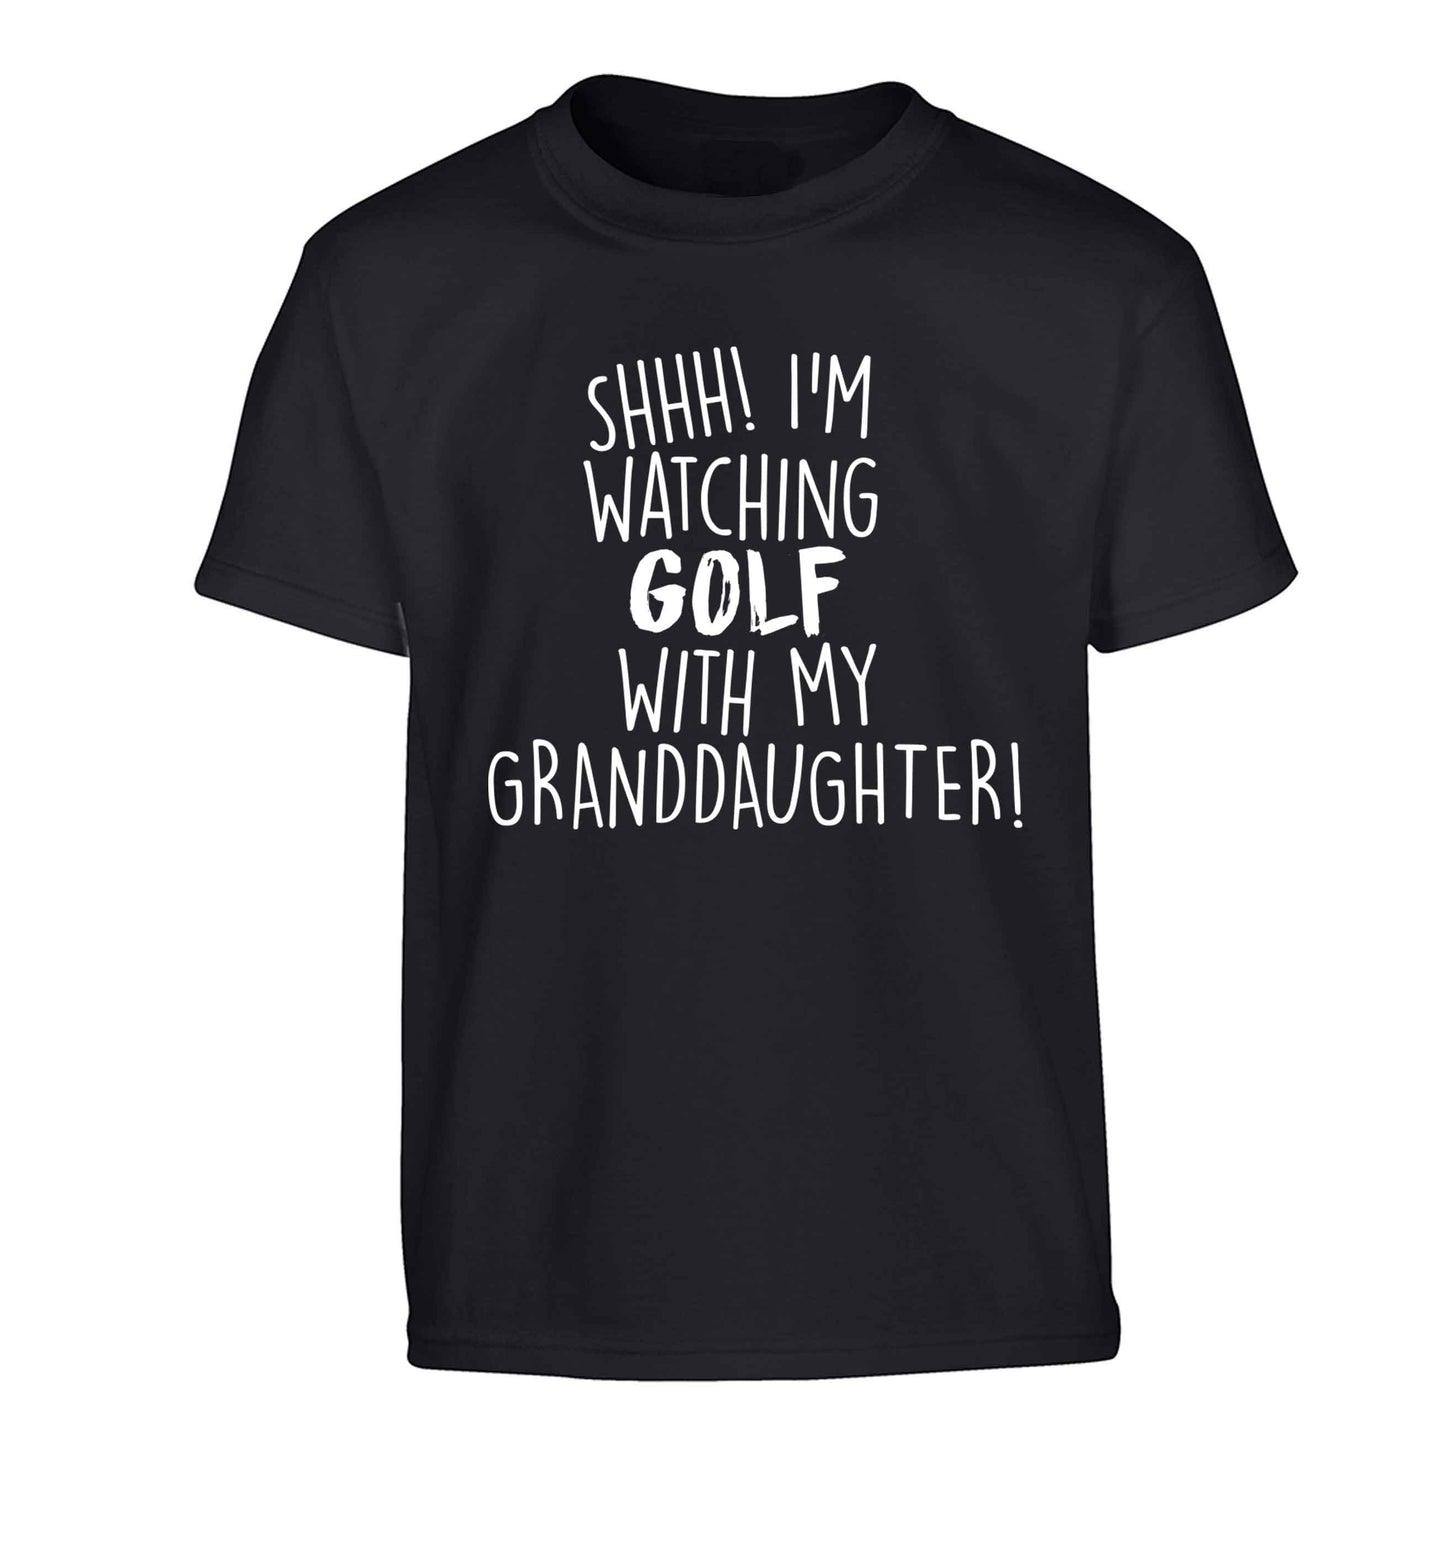 Shh I'm watching golf with my granddaughter Children's black Tshirt 12-13 Years